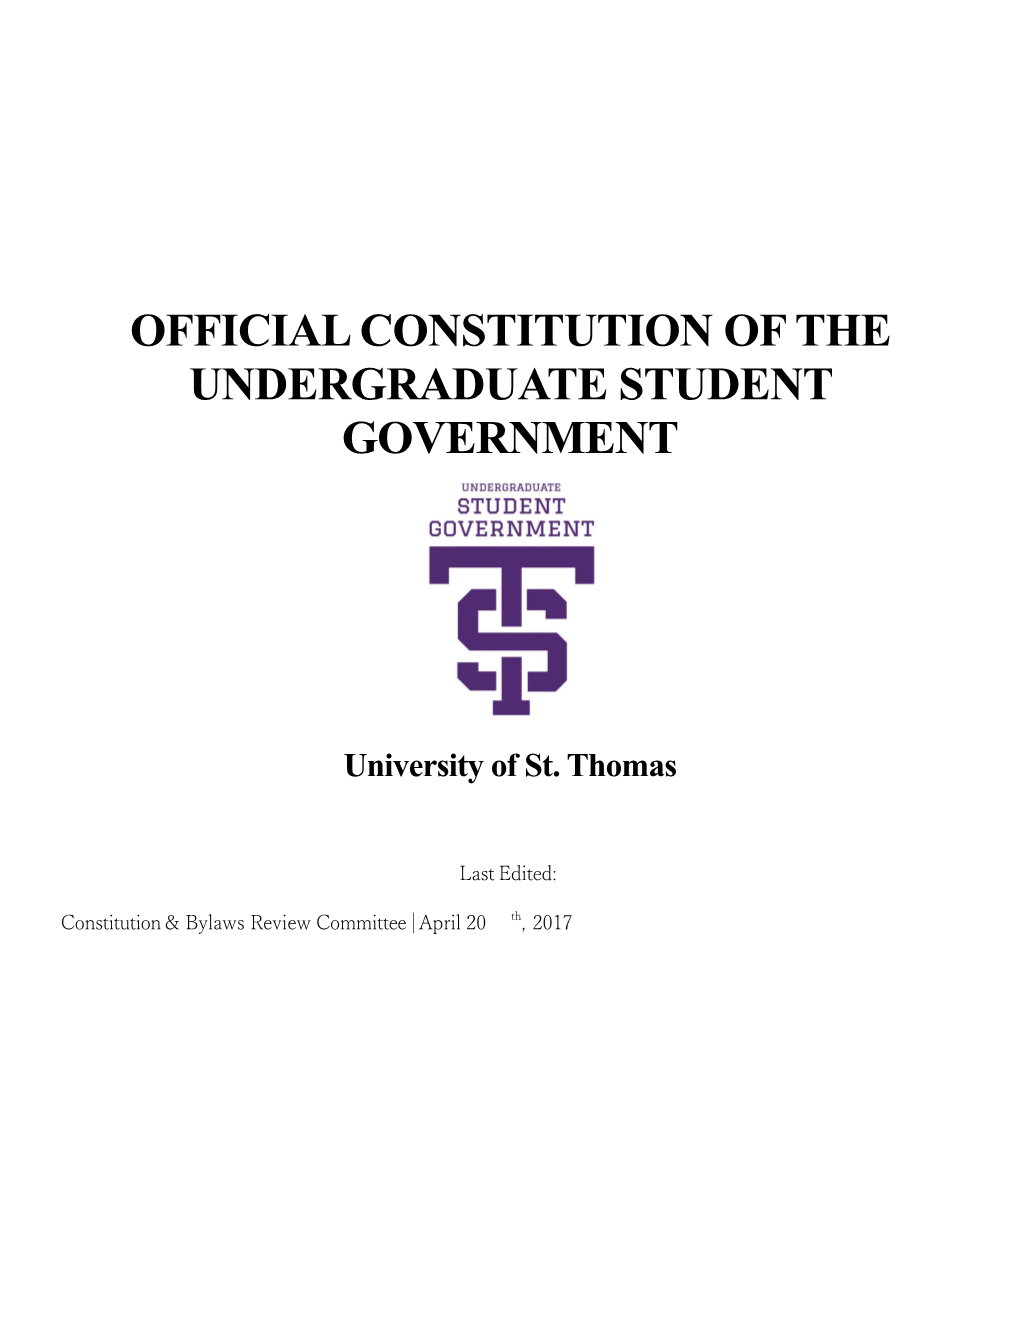 Official Constitutionof the Undergraduate Student Government